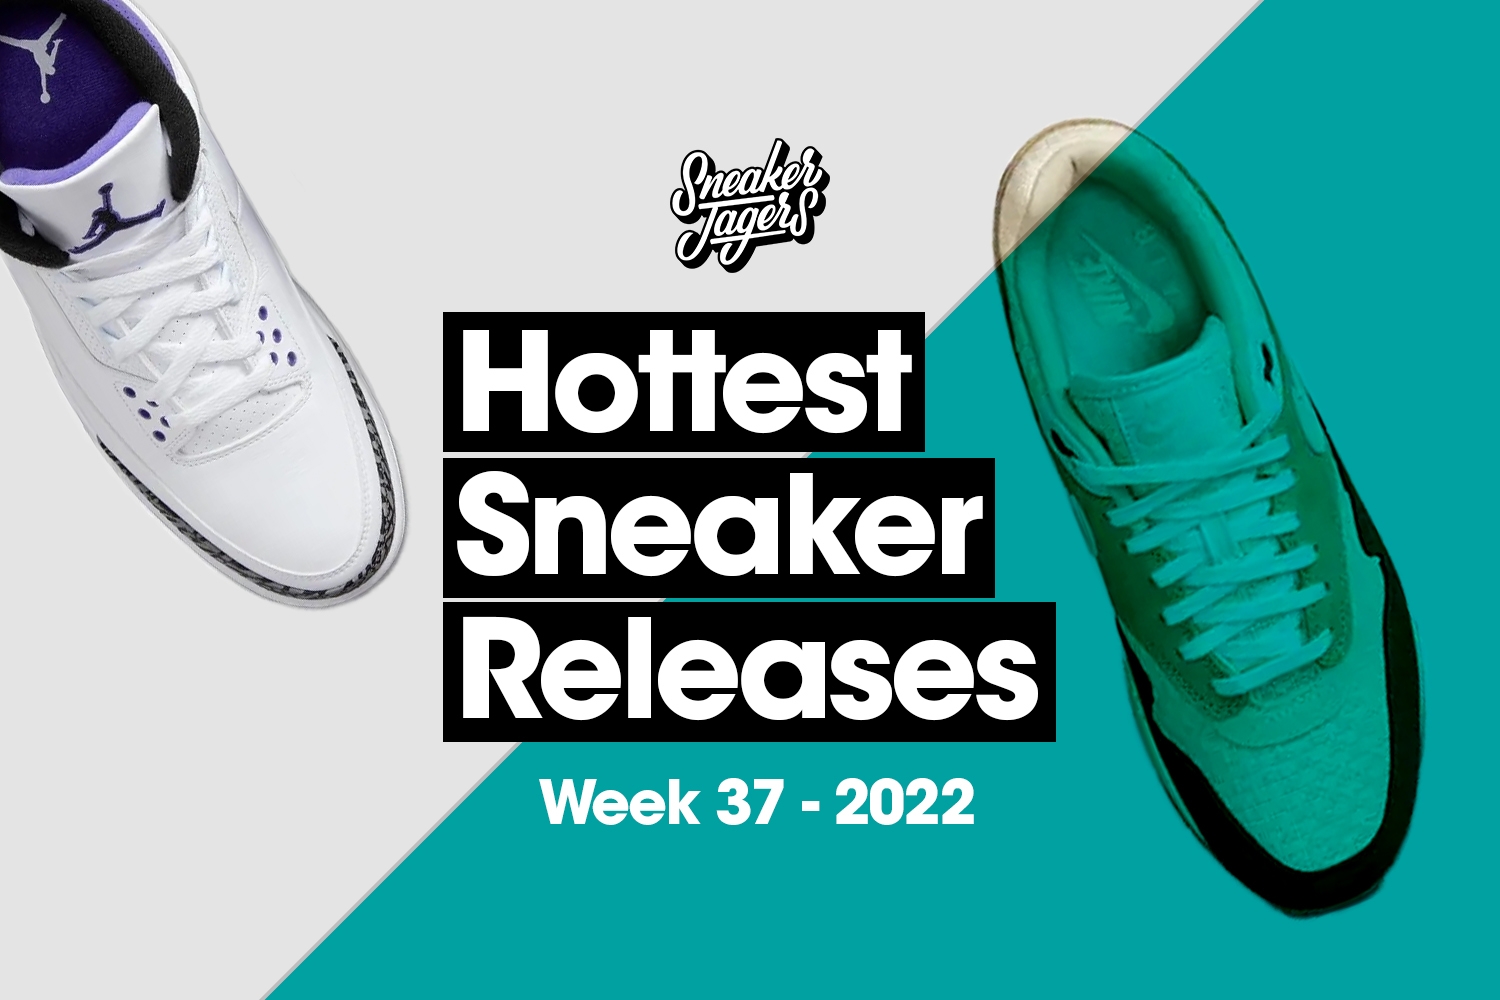 Hottest Sneaker Releases - Week 37